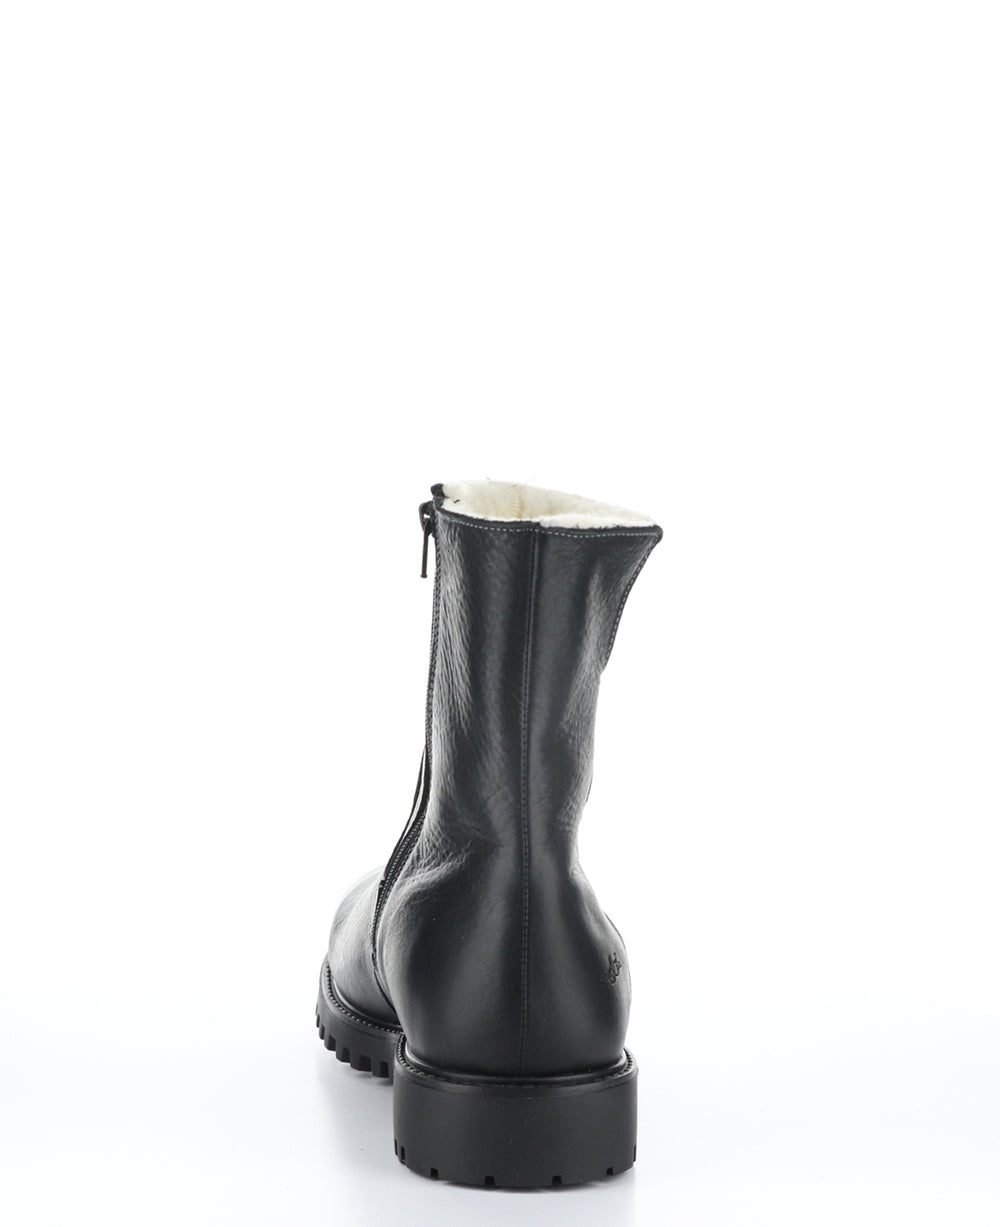 DEREK Black Zip Up Boots|DEREK Bottes avec Fermeture Zippée in Noir